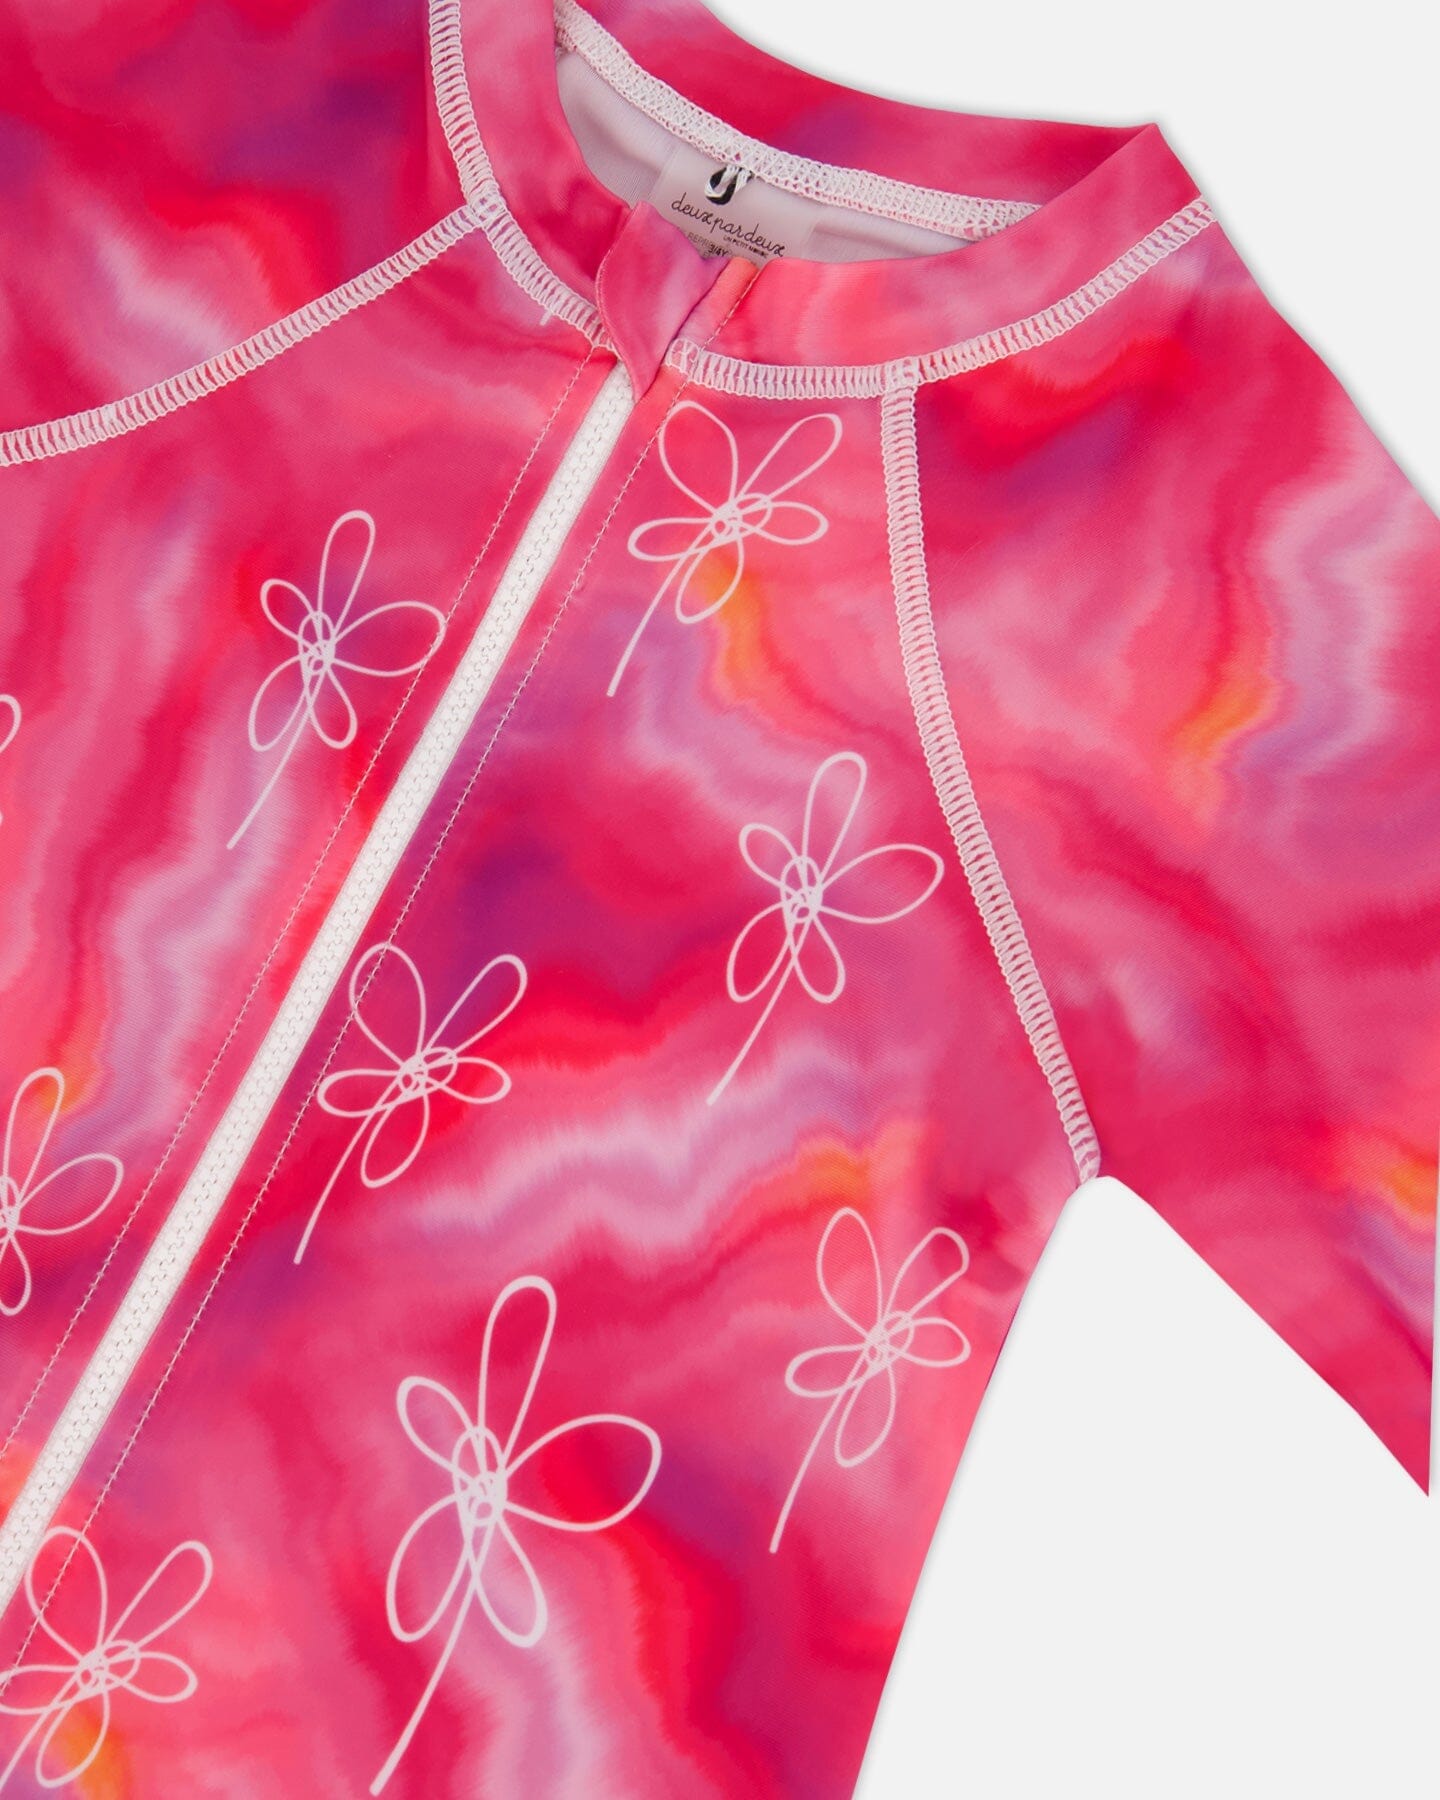 Long Sleeve One Piece Rashguard Fuchsia Tie Dye Printed Flowers - F30NG42_046